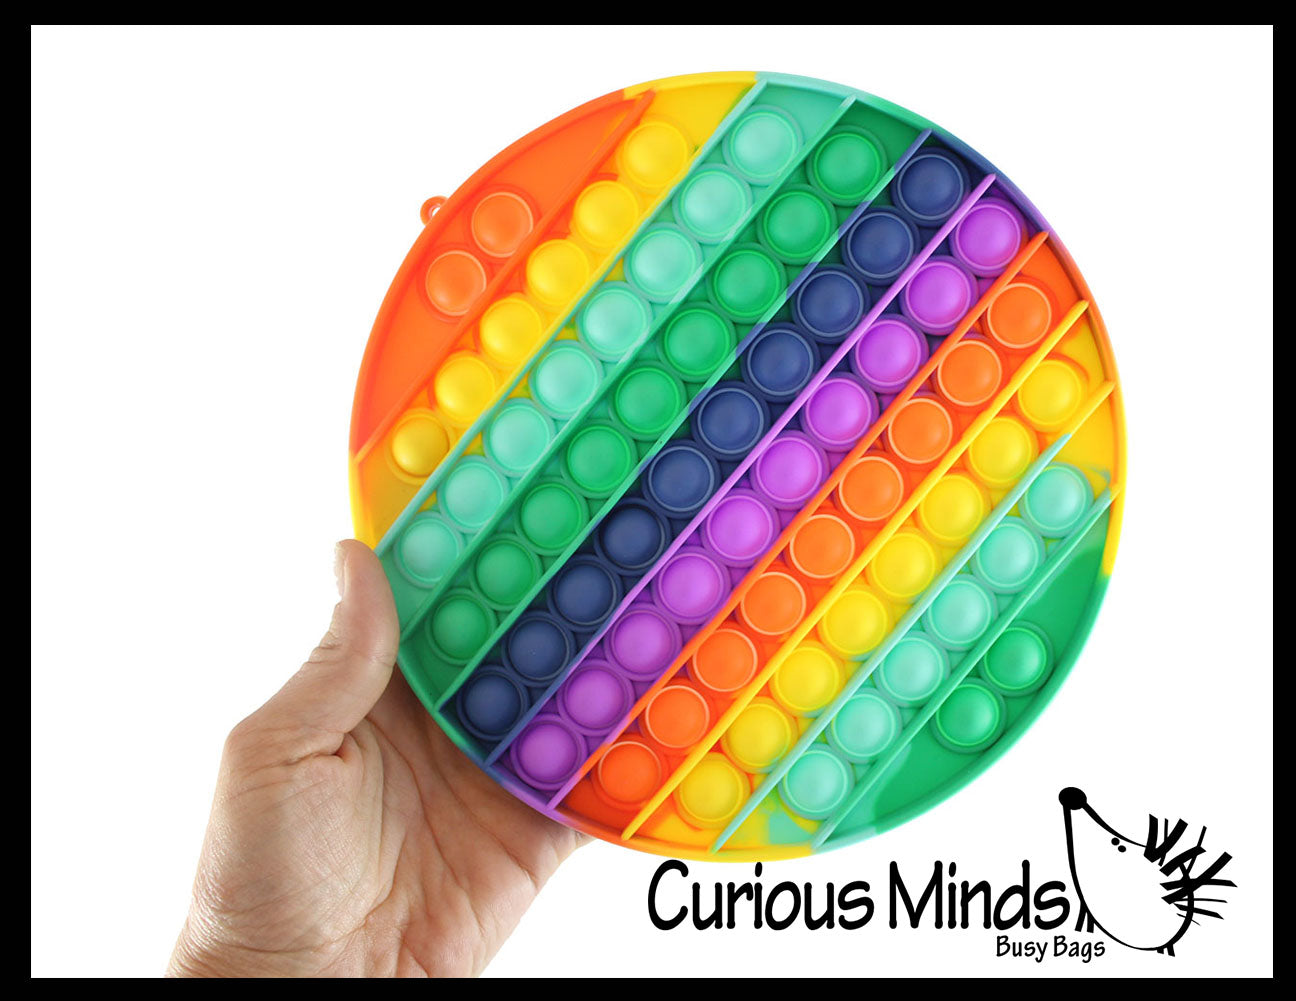 Rainbow Large 8 Bubble Pop Game - Silicone Push Poke Bubble Wrap Fidg